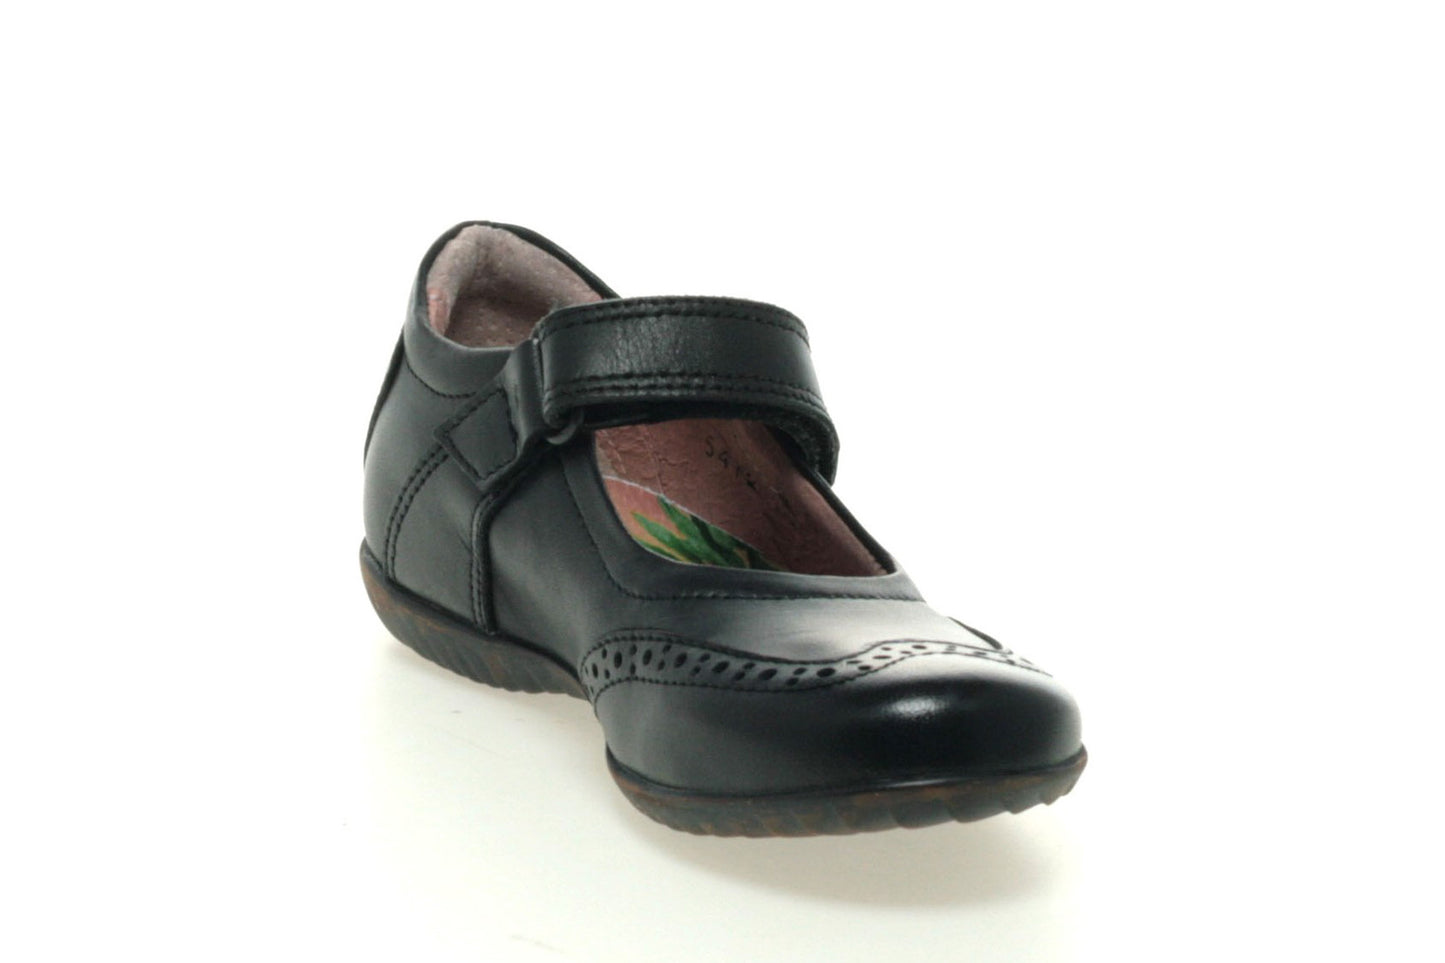 Expo 3 Black Leather Mary-Jane Girls School Shoe